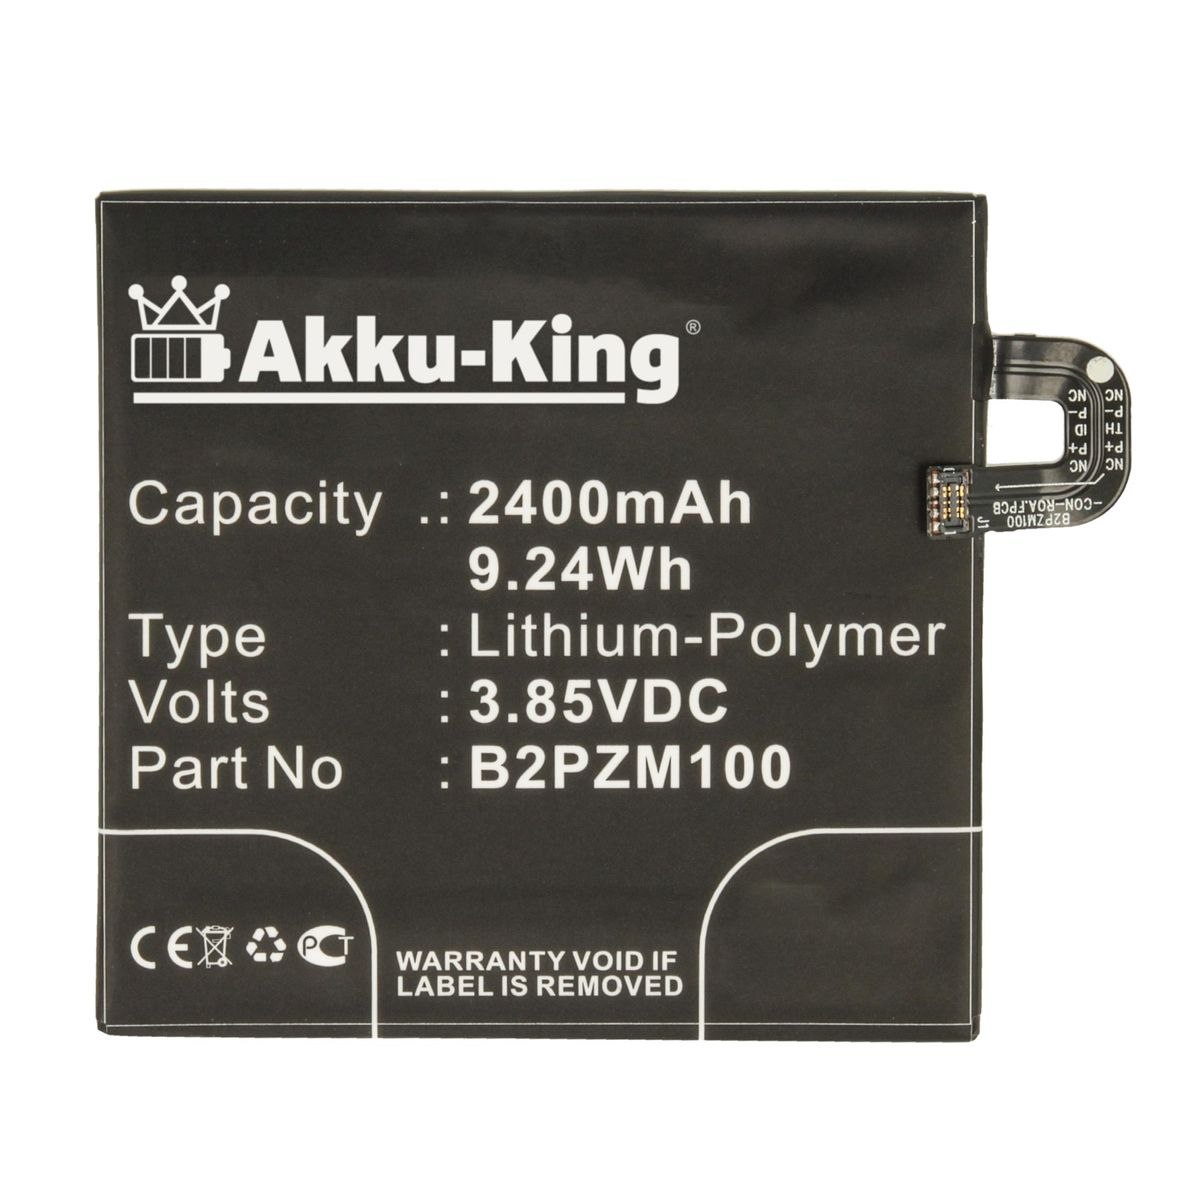 HTC Akku Handy-Akku, Li-Polymer kompatibel AKKU-KING 2400mAh 3.85 Volt, 35H00270-00M mit